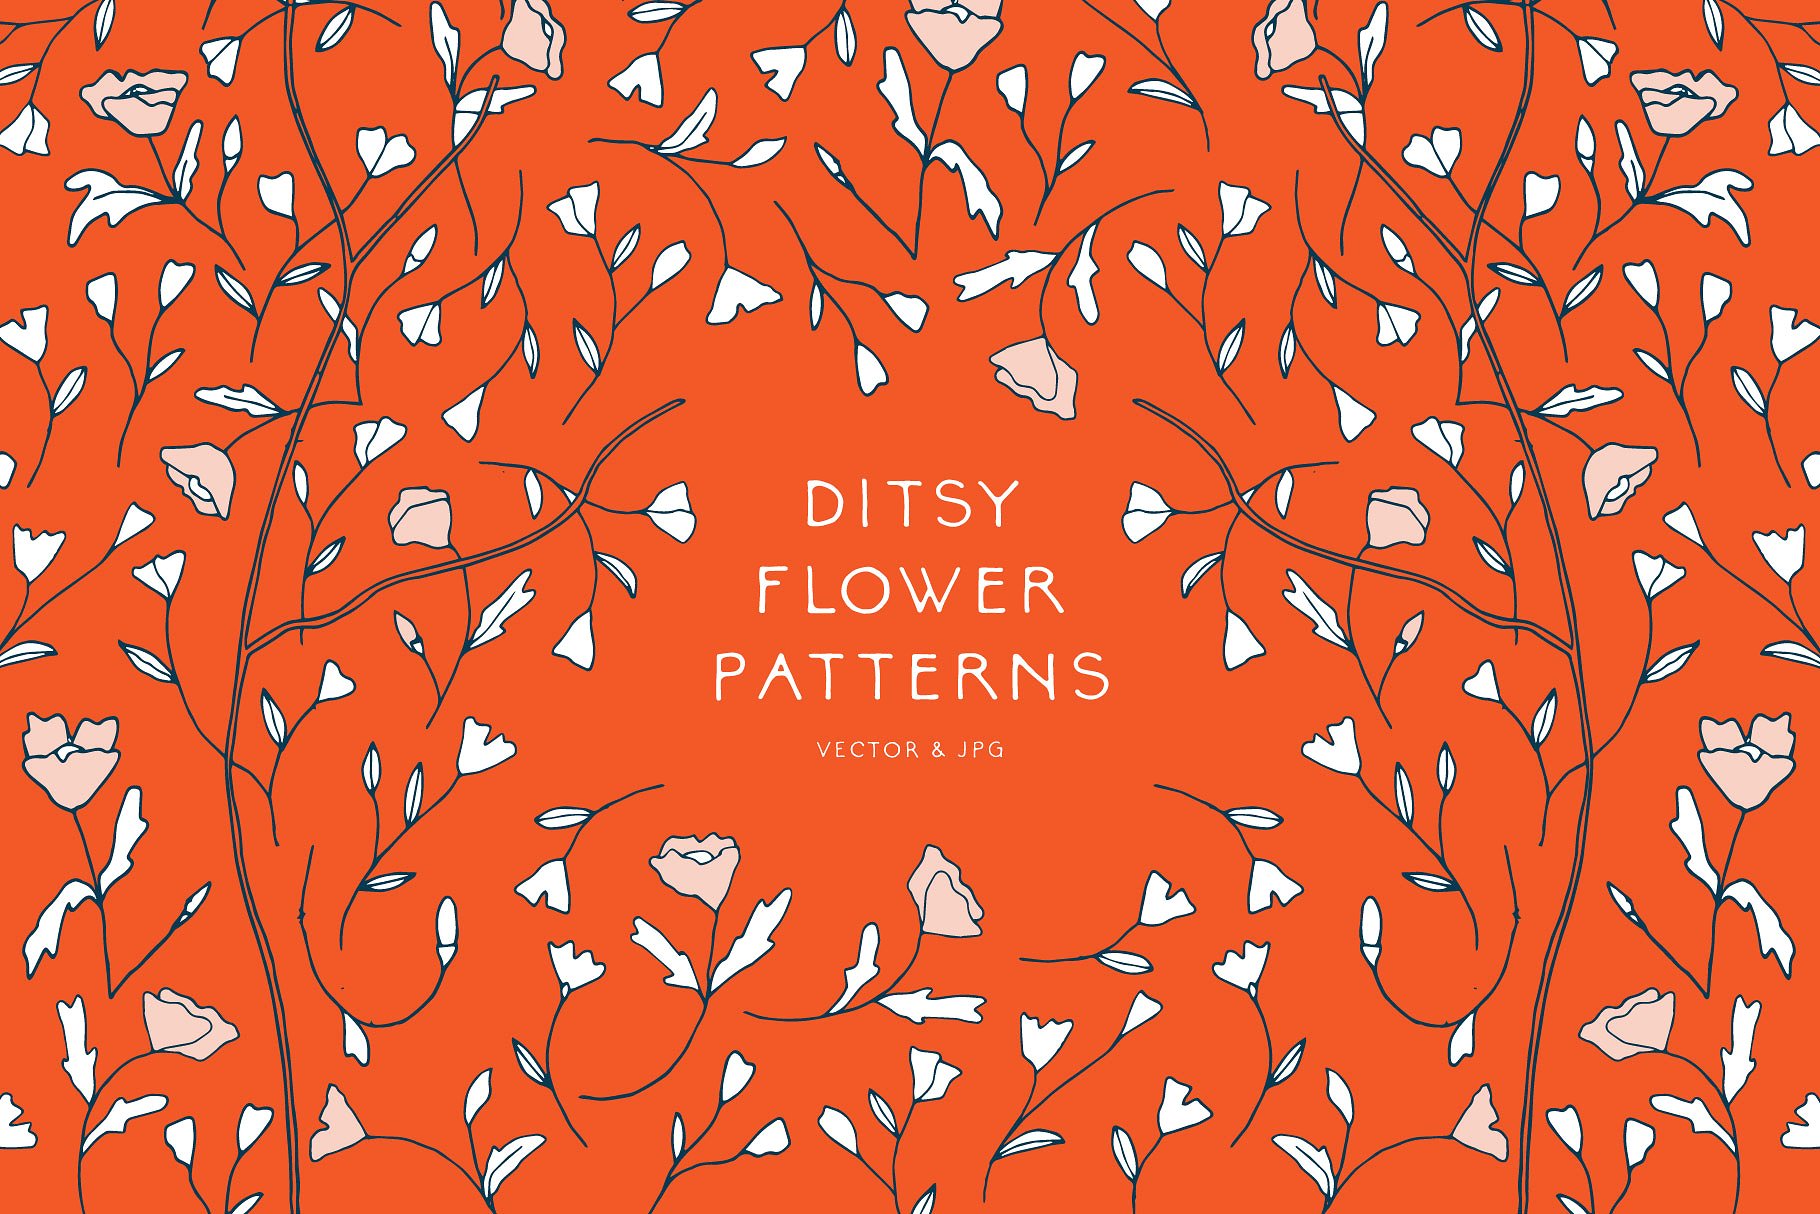 Ditsy矢量花卉图案集合 Ditsy Pattern Collection插图